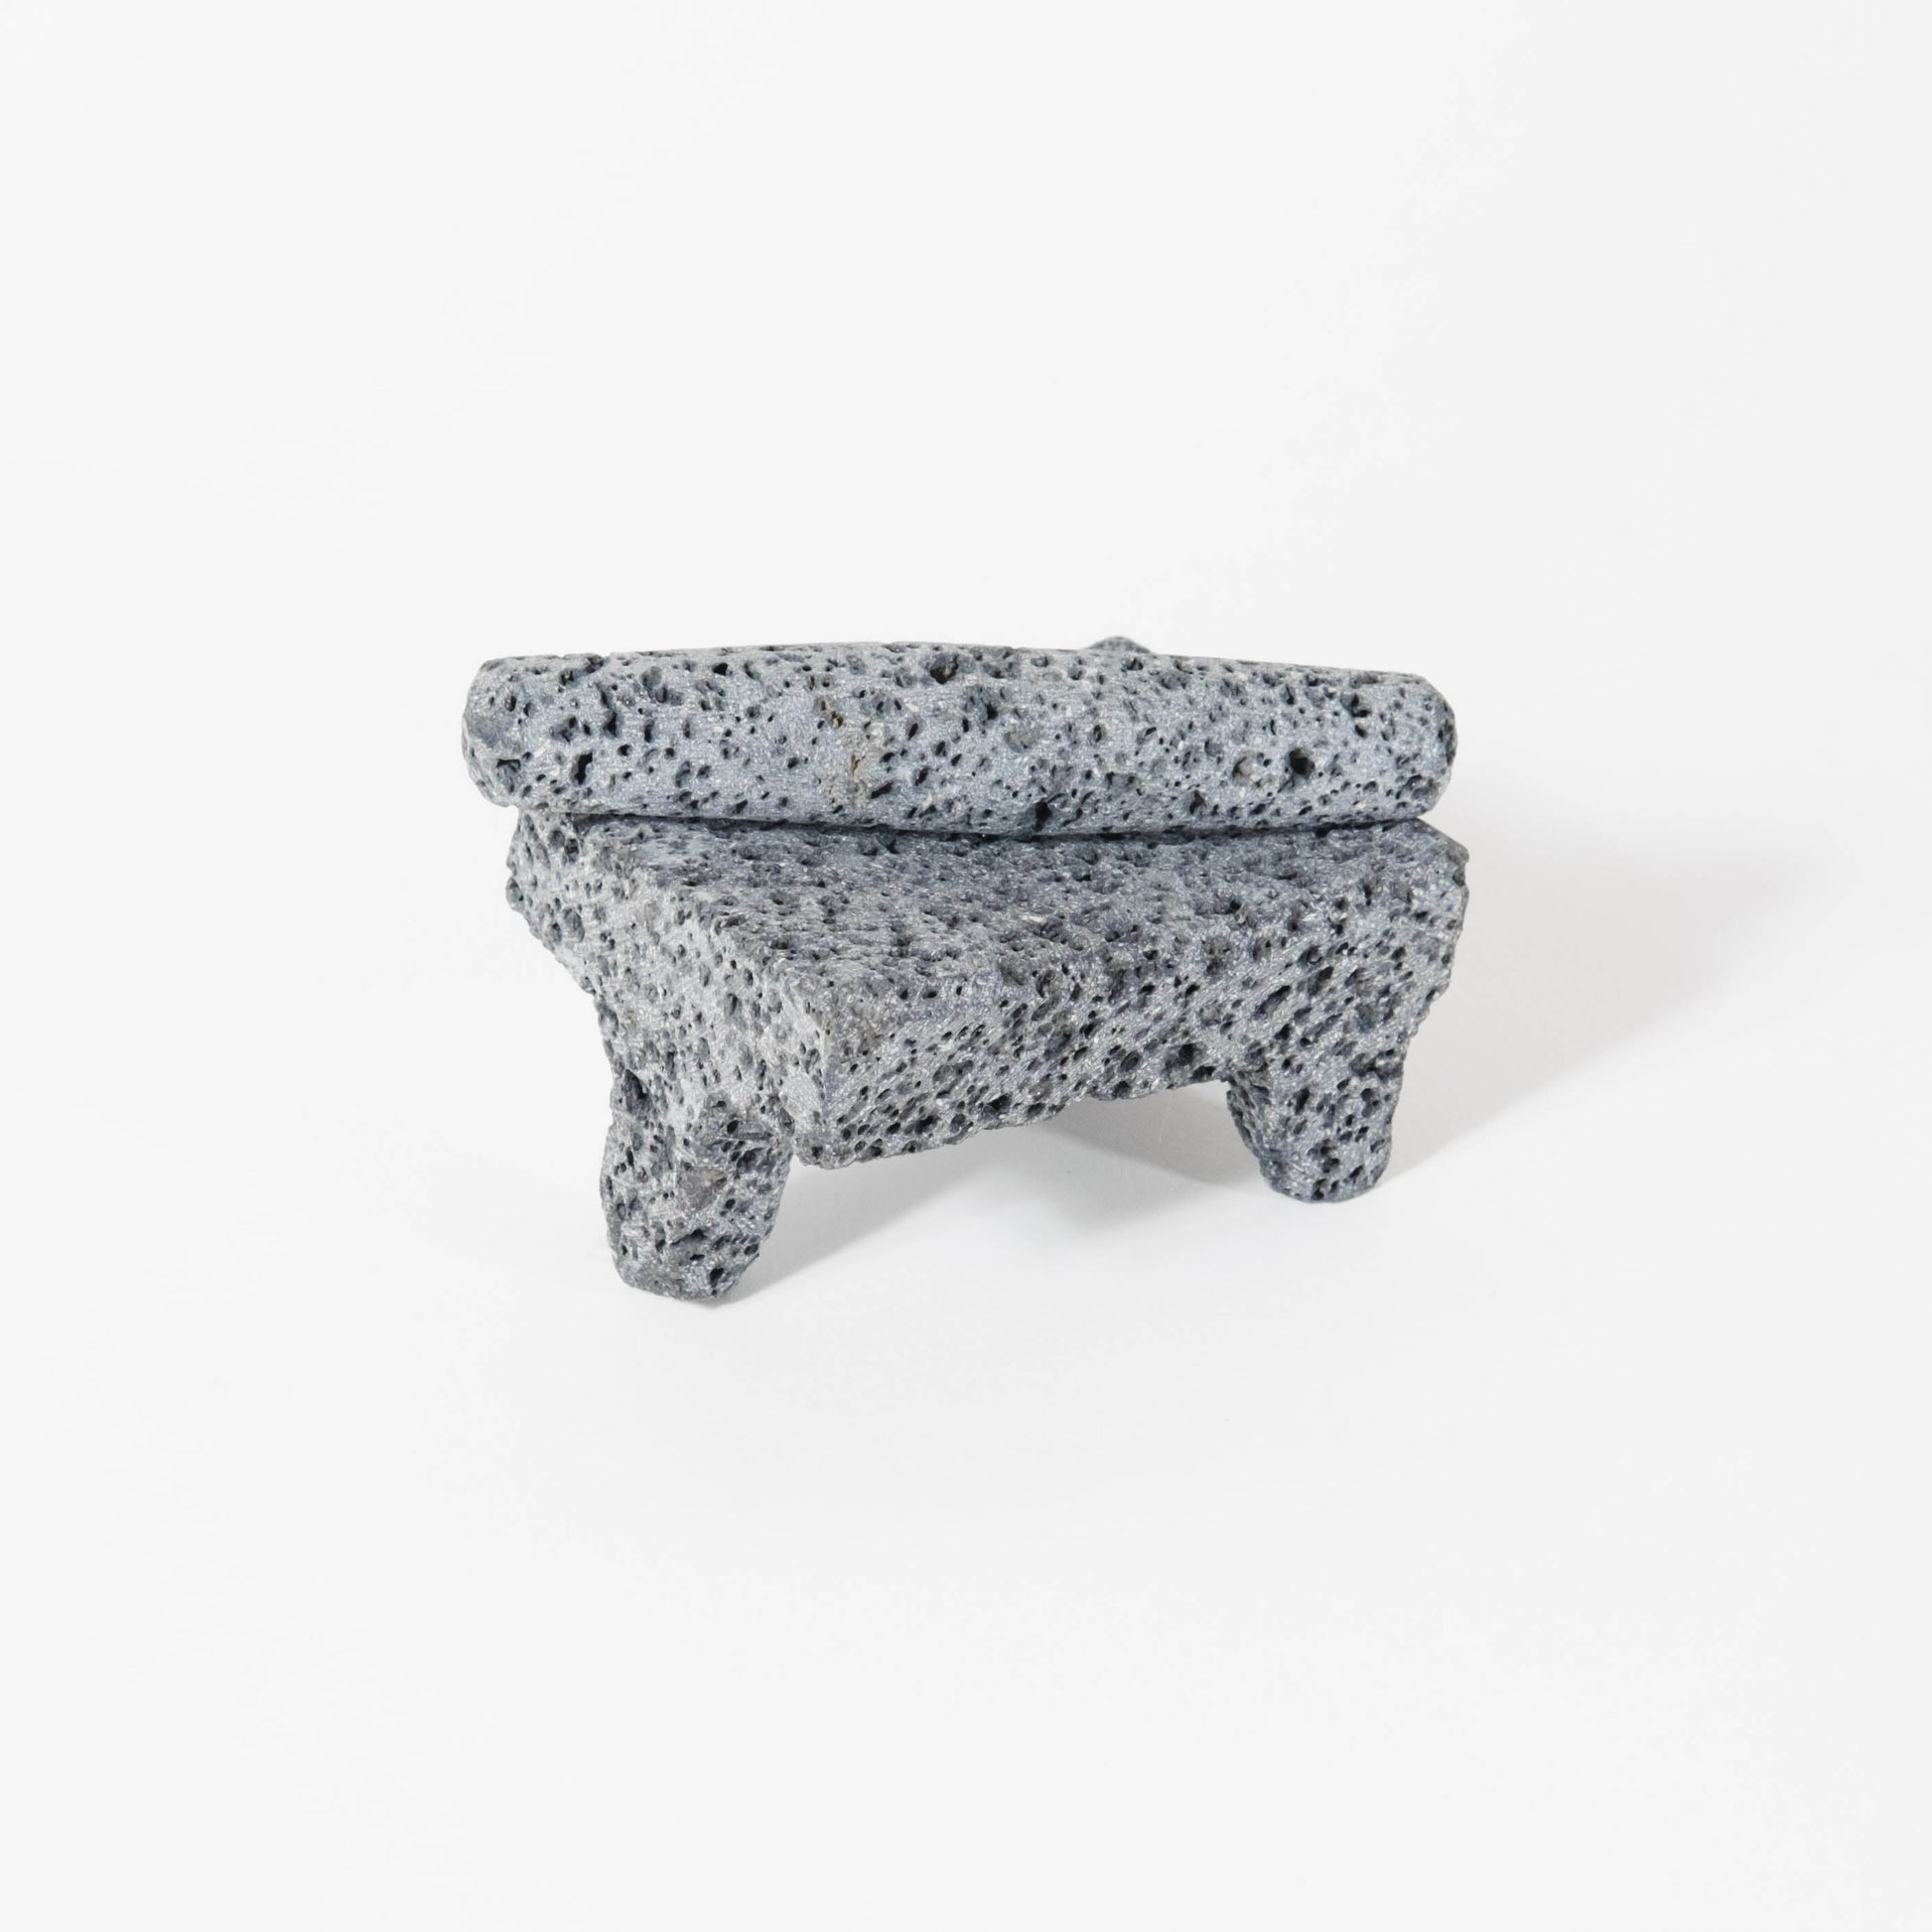 Mini Metatl - Grinding Stone Common Things